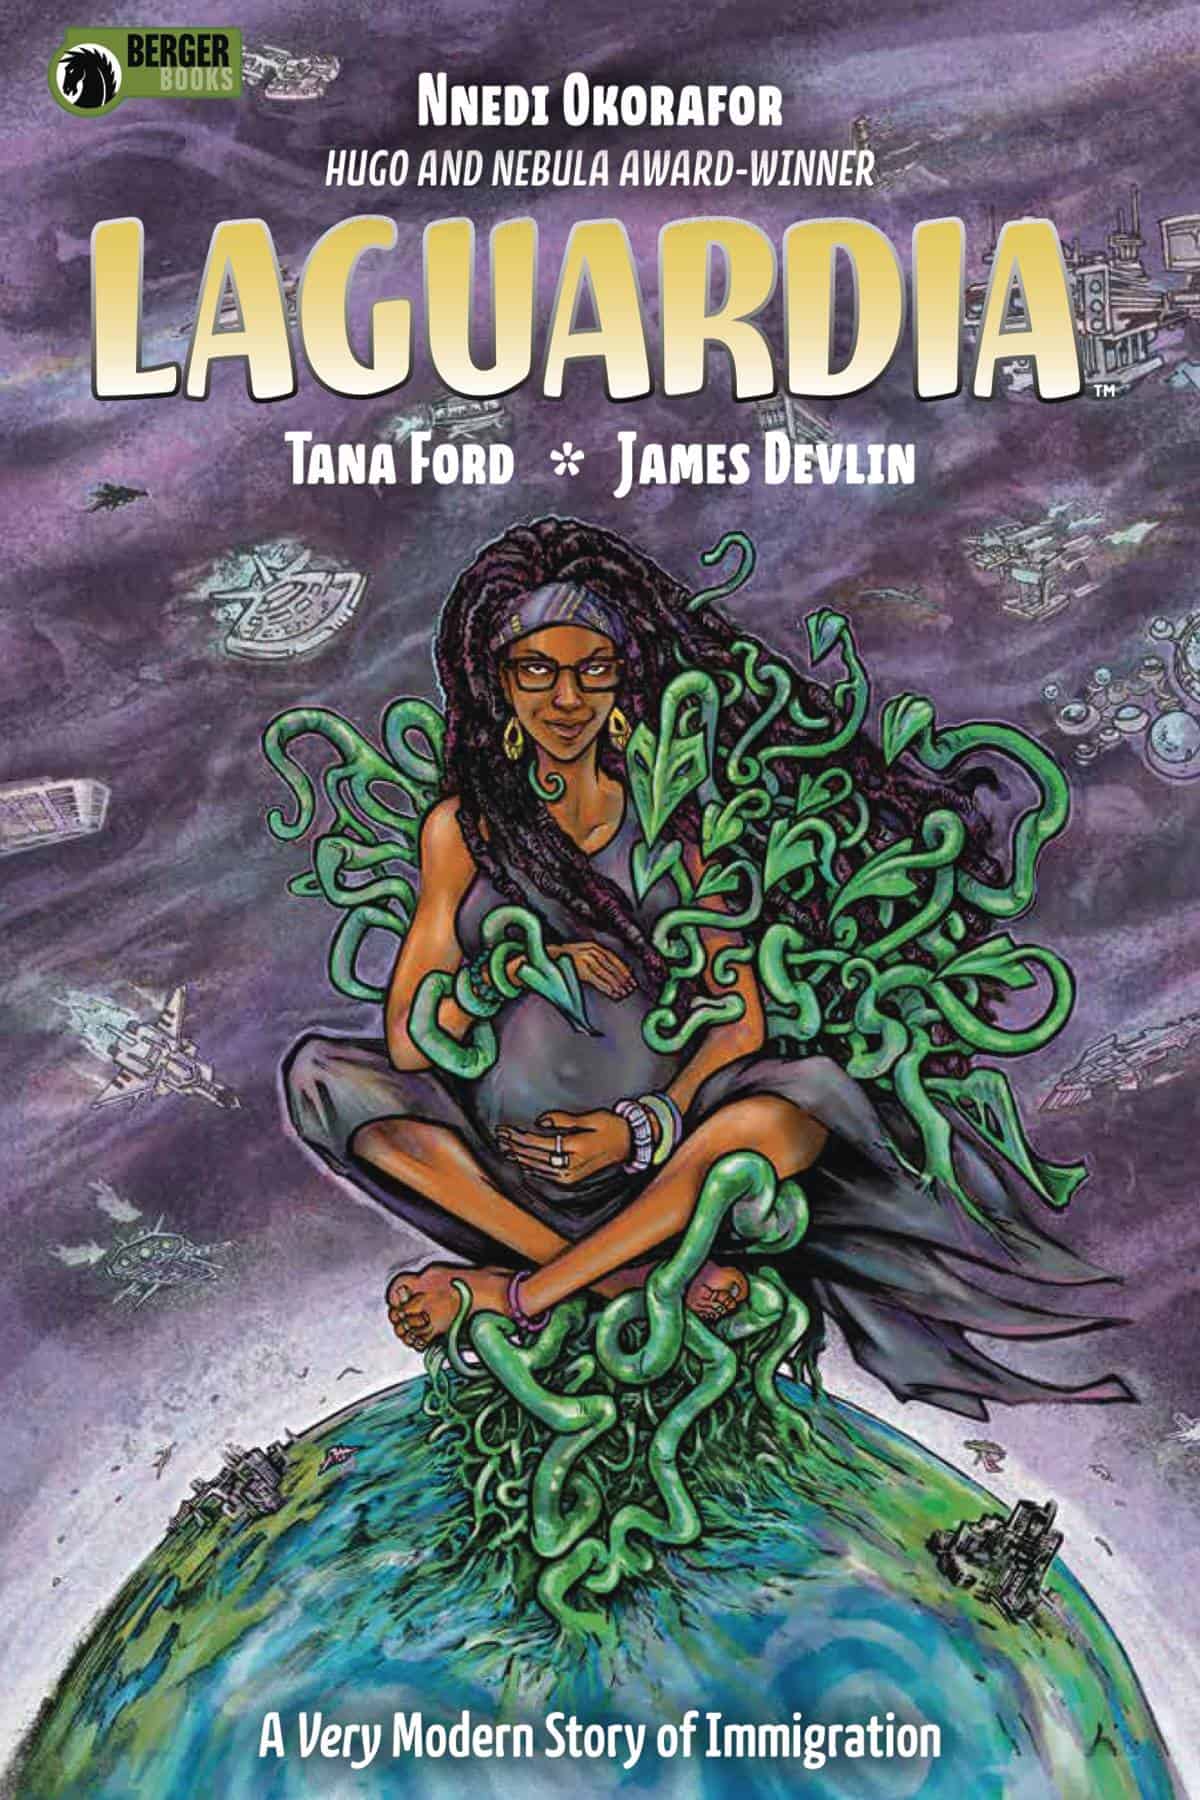 Nnedi Okorafor will launch Sci-fi Comic Series “LaGuardia” in December